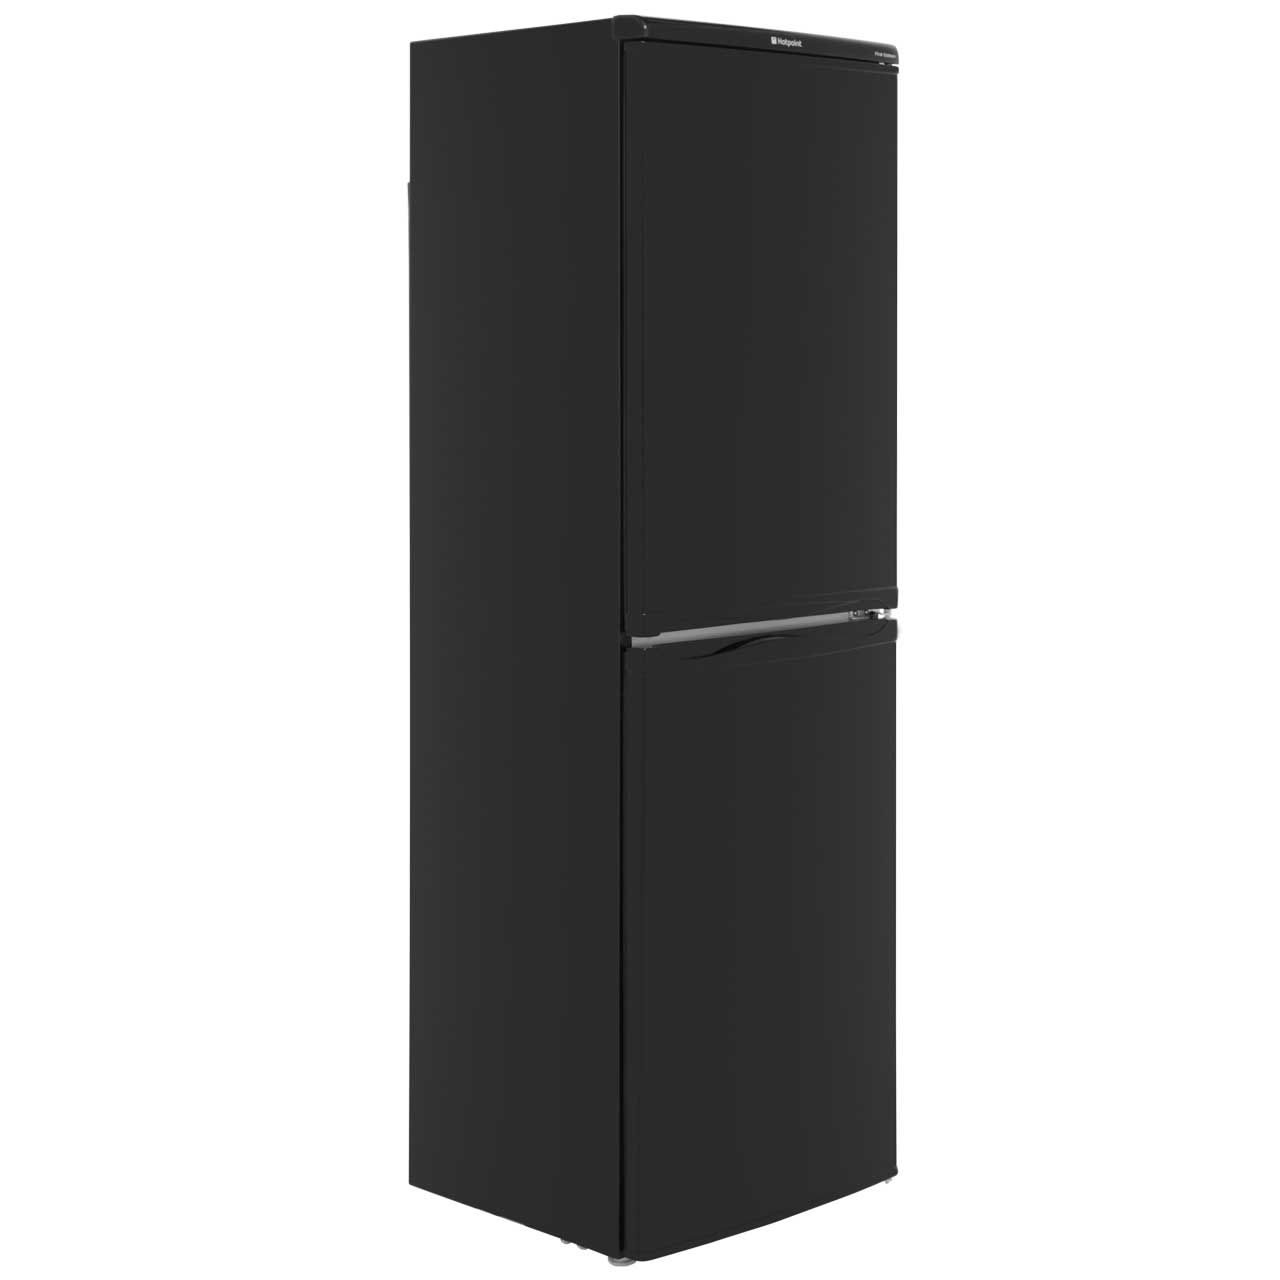 Hotpoint First Edition RFAA52K Free Standing Fridge Freezer in Black